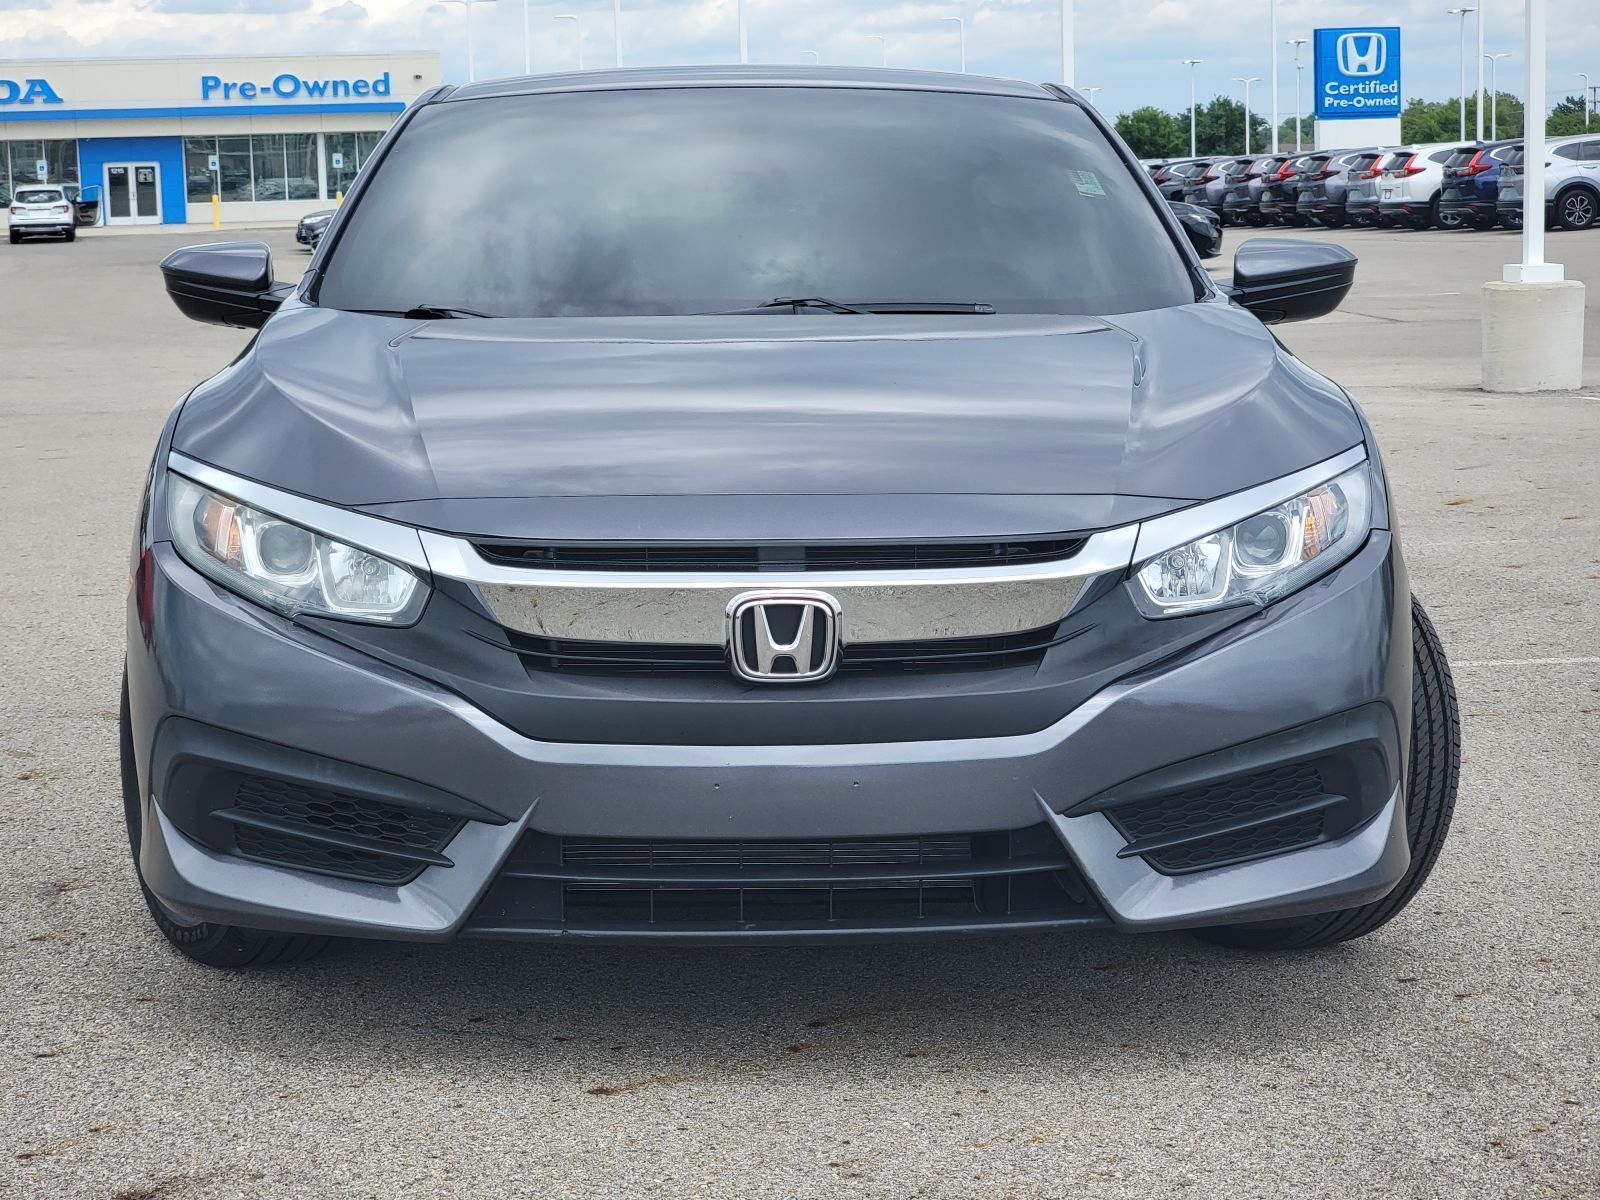 Used, 2016 Honda Civic LX, Gray, P0555-9